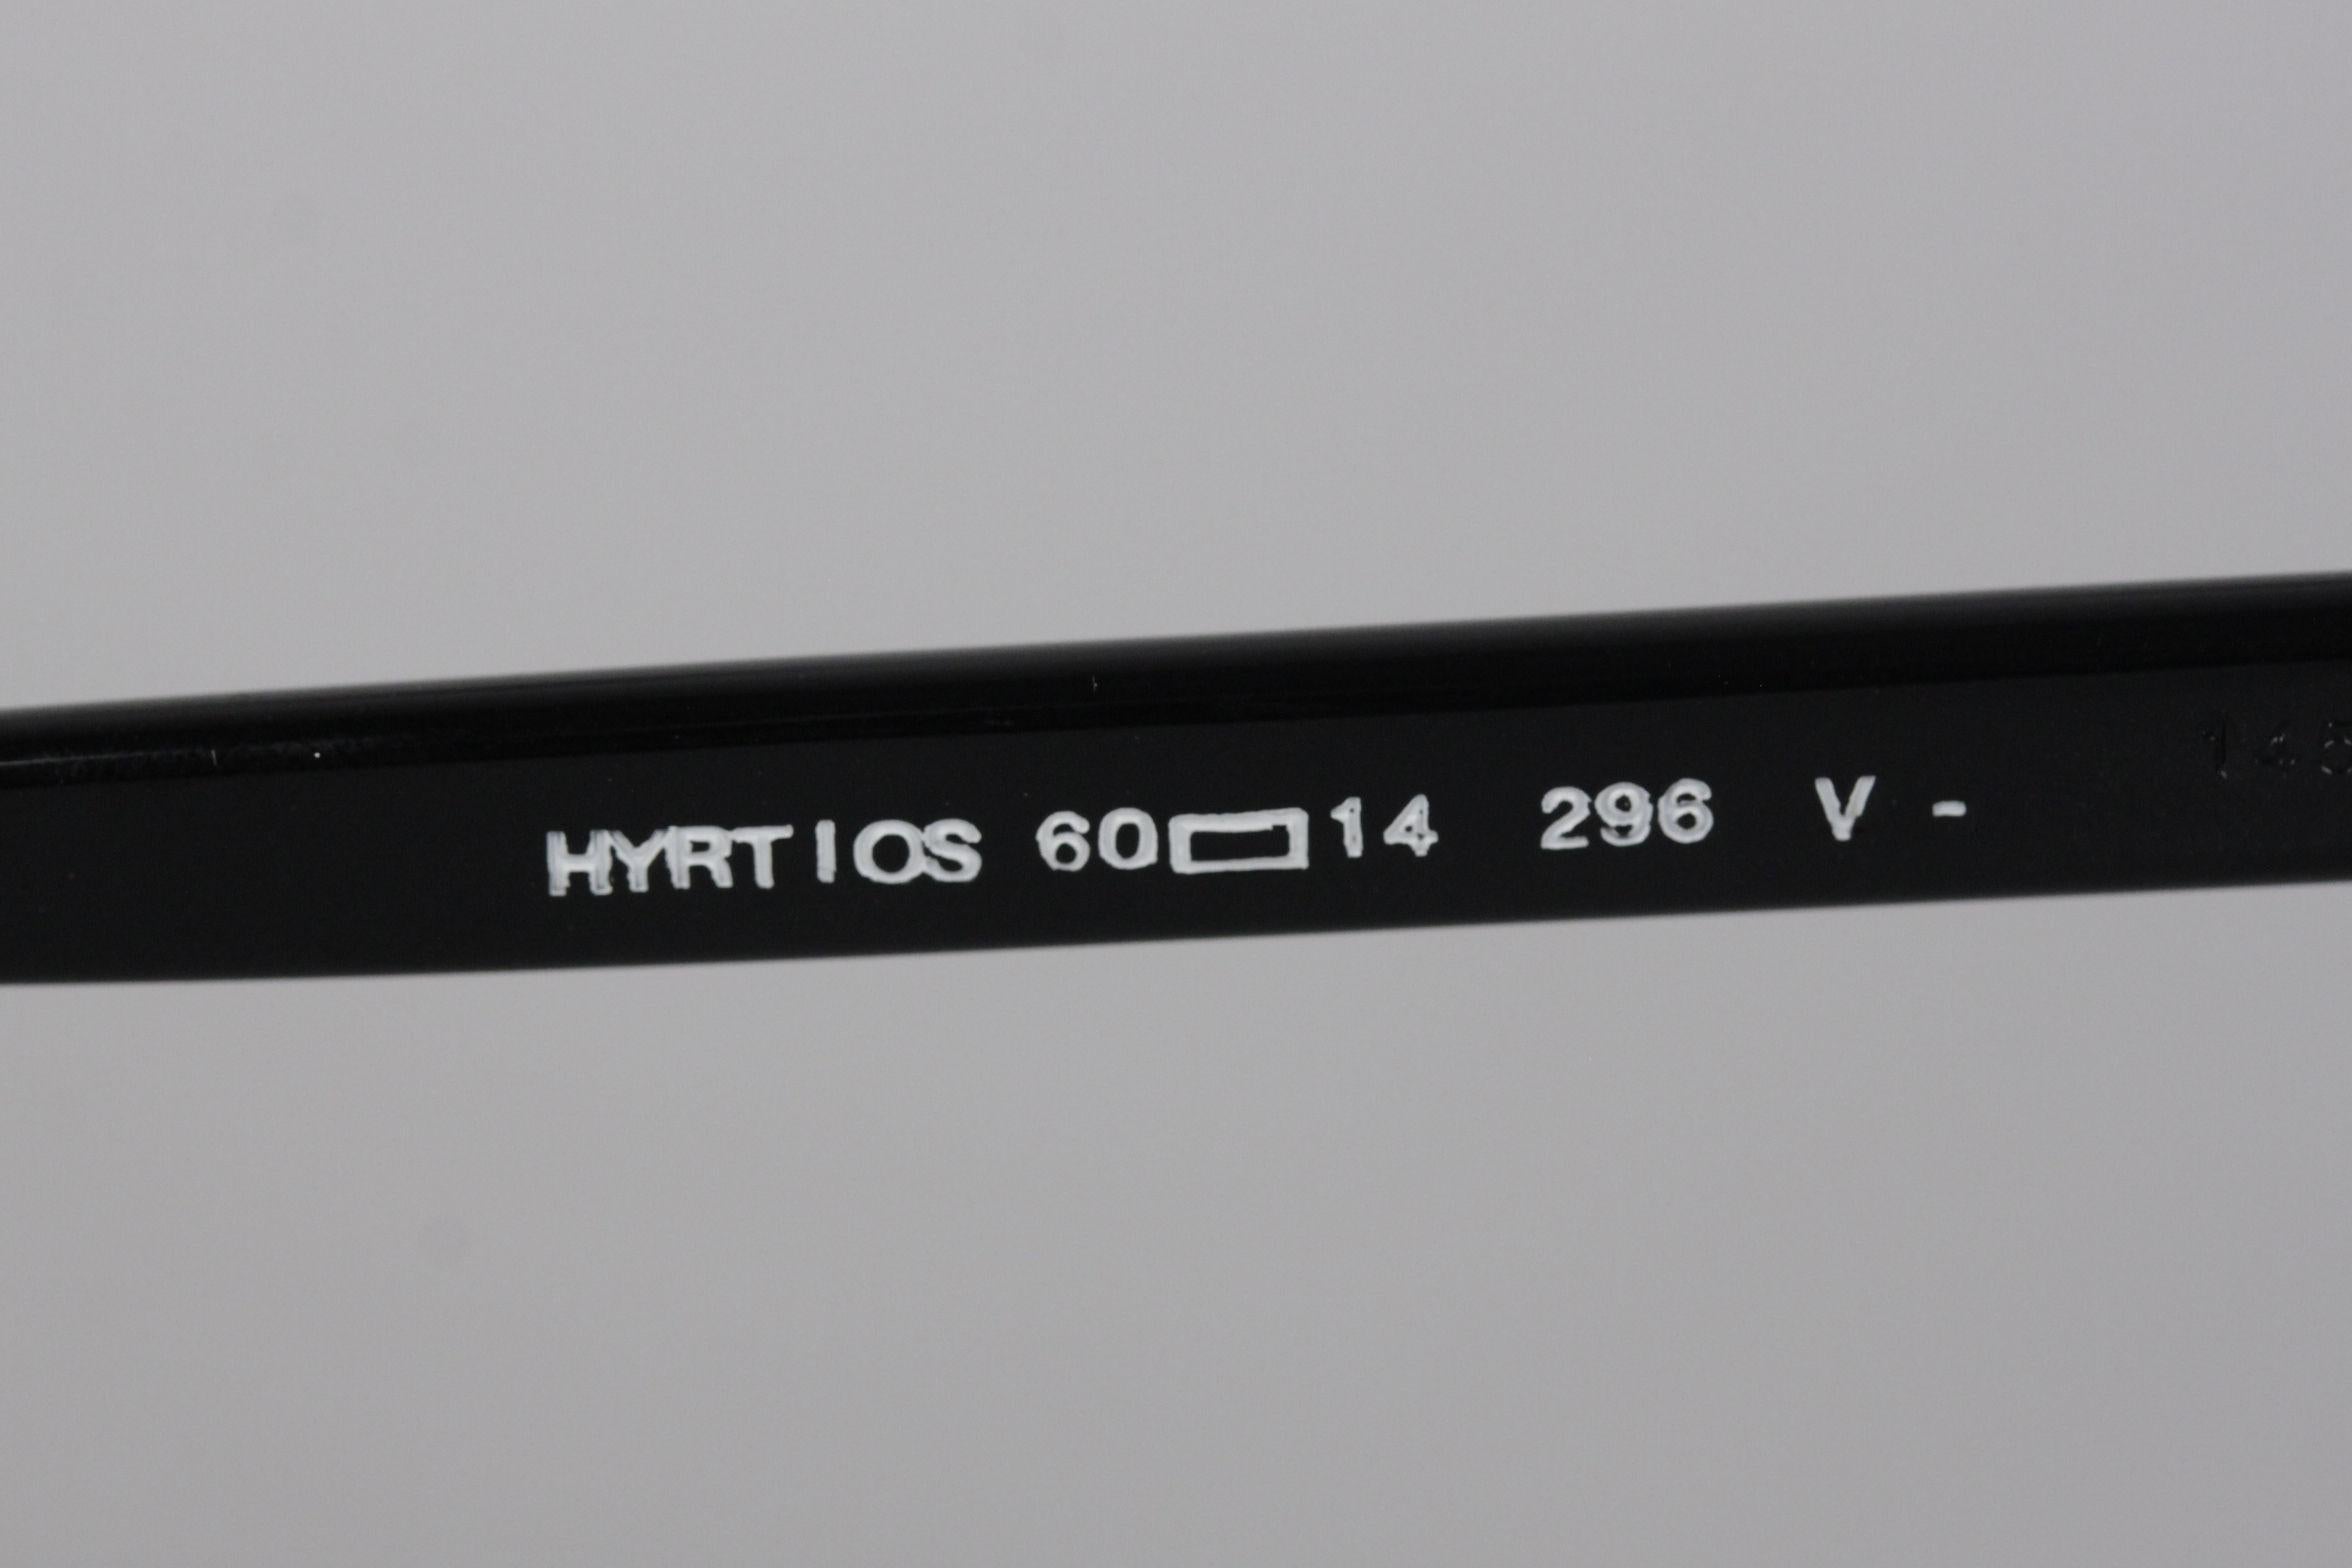 Yves Saint Laurent Vintage Sunglasses 60mm Mod. Hyrtios New Old Stock 4